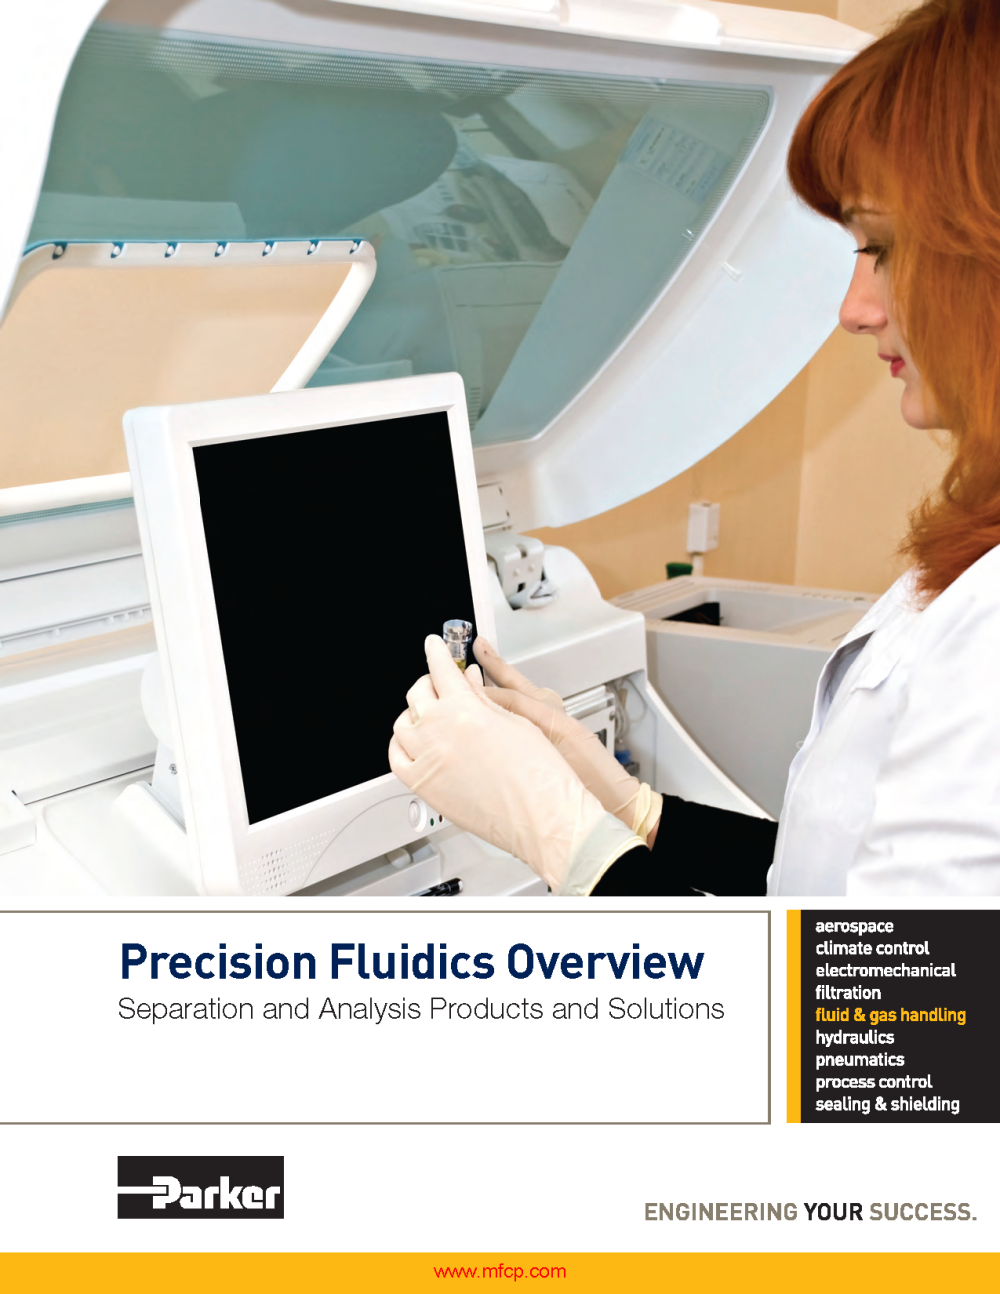 Parker Precision Fluidics Analysis Overview 2010